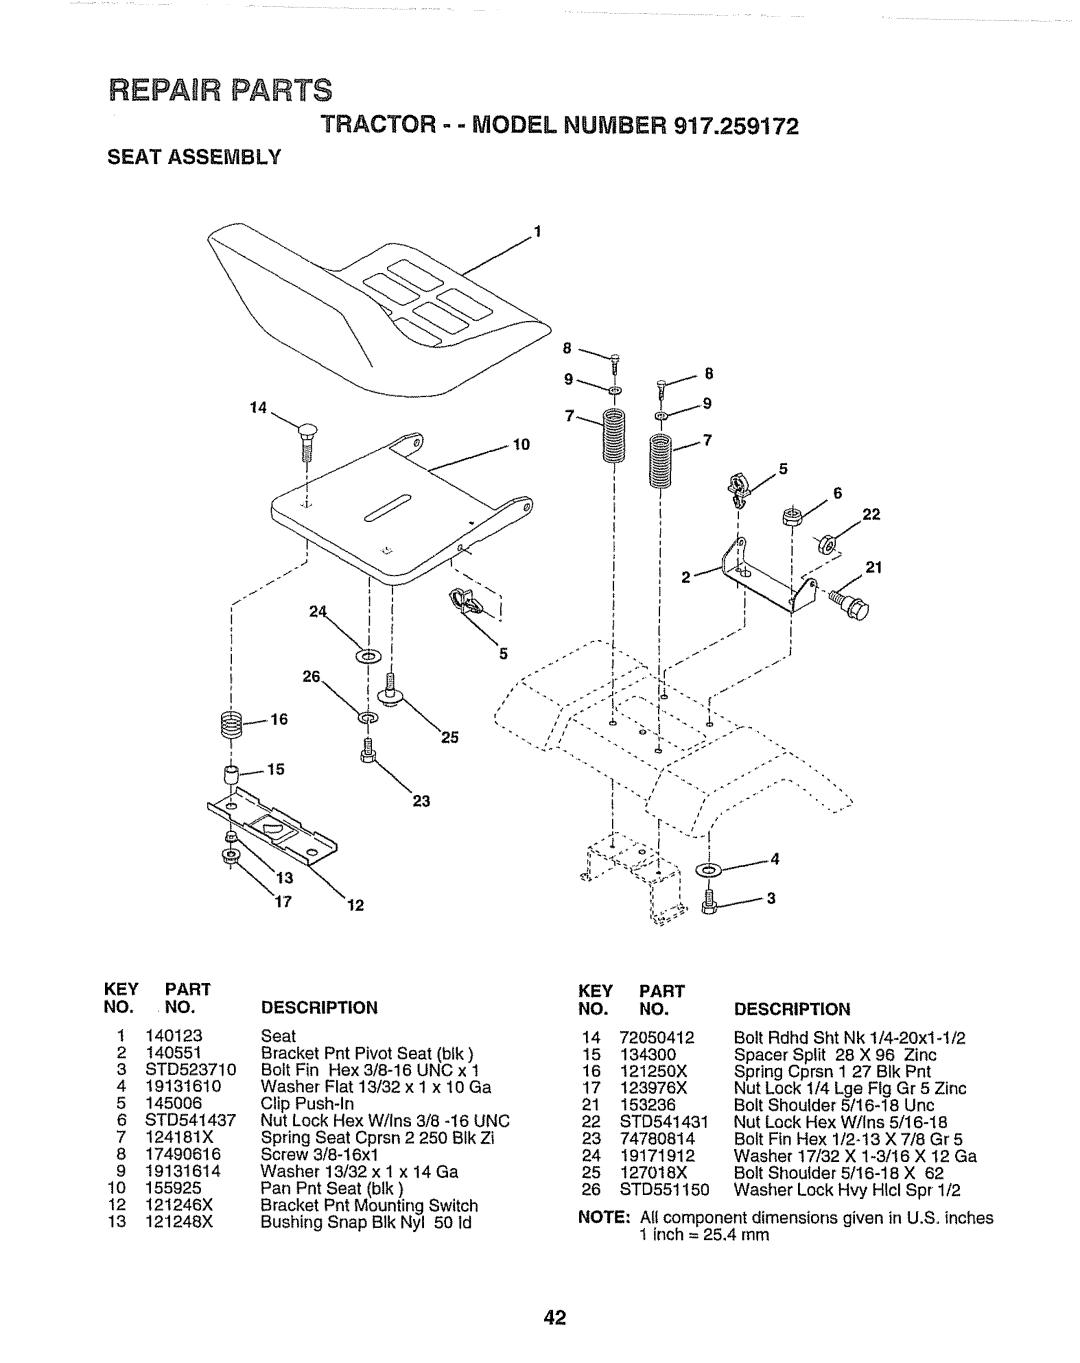 Craftsman 917.259172 Seat Assembly, Description, Clip Push-In, Repair Parts, Tractor - - Model Number, Key Part No. No 